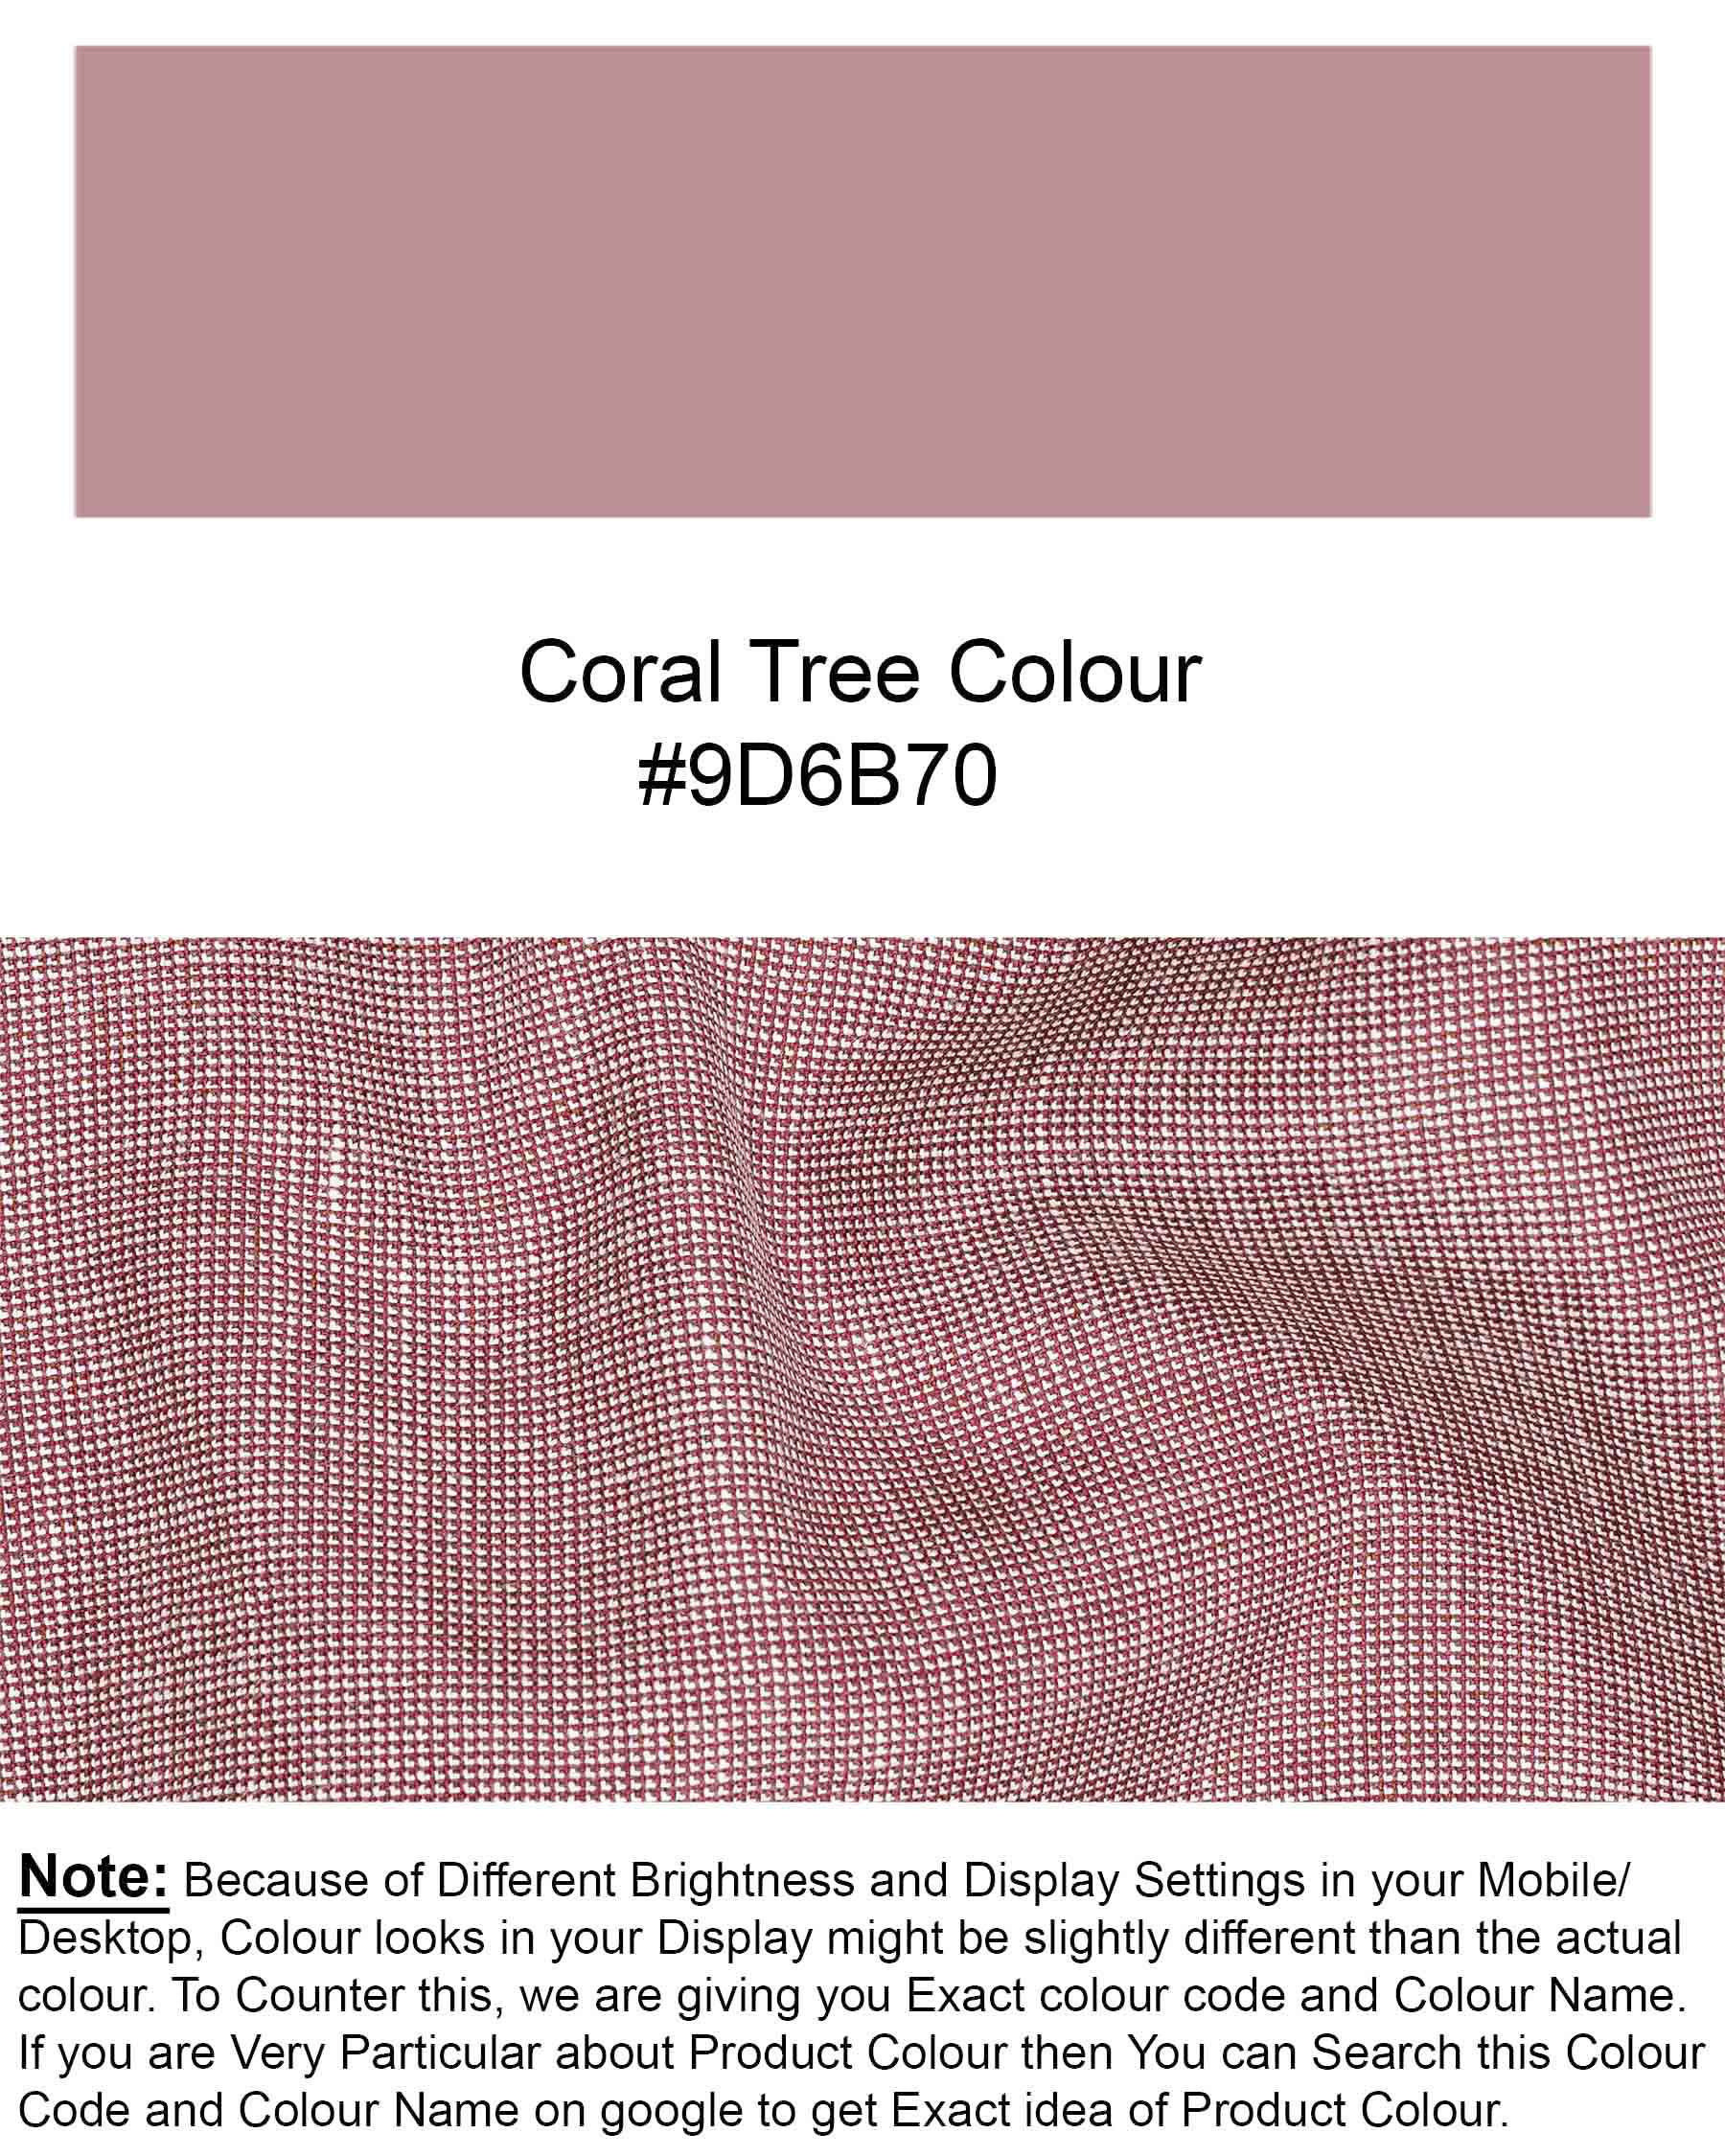 Coral Tree Red Single Breasted Blazer BL1915-SB-36,BL1915-SB-38,BL1915-SB-40,BL1915-SB-42,BL1915-SB-44,BL1915-SB-46,BL1915-SB-48,BL1915-SB-50,BL1915-SB-52,BL1915-SB-54,BL1915-SB-56,BL1915-SB-58,BL1915-SB-60